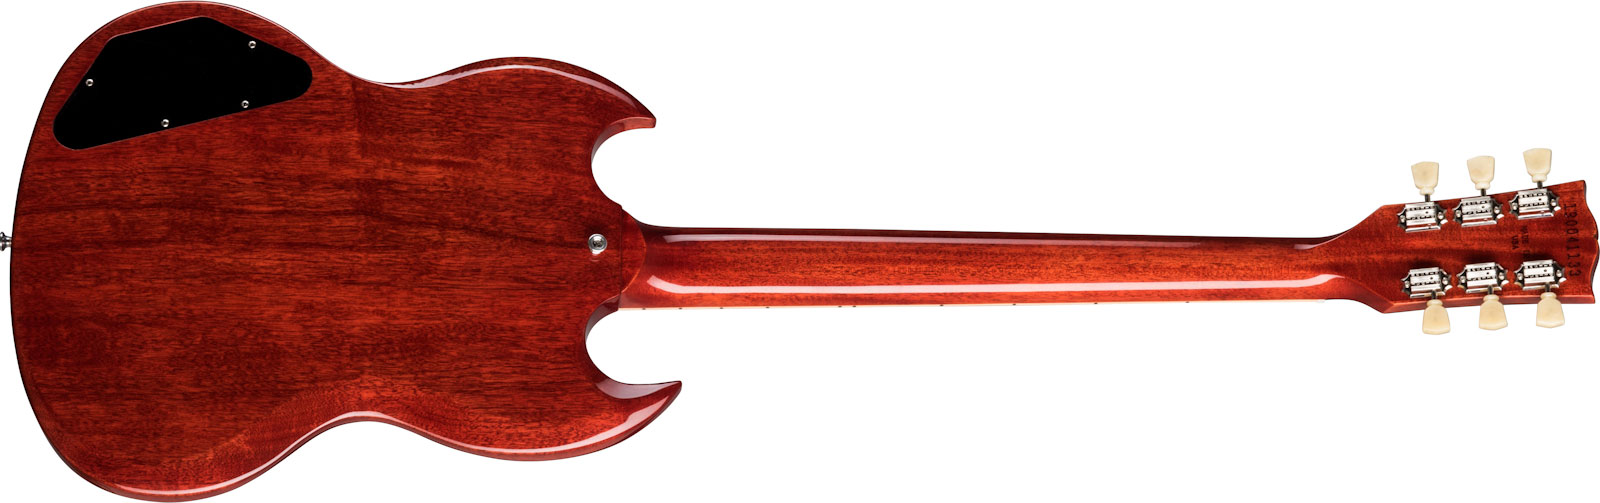 Gibson Sg Standard '61 Maestro Vibrola Original 2h Trem Rw - Guitarra electrica retro rock - Variation 1